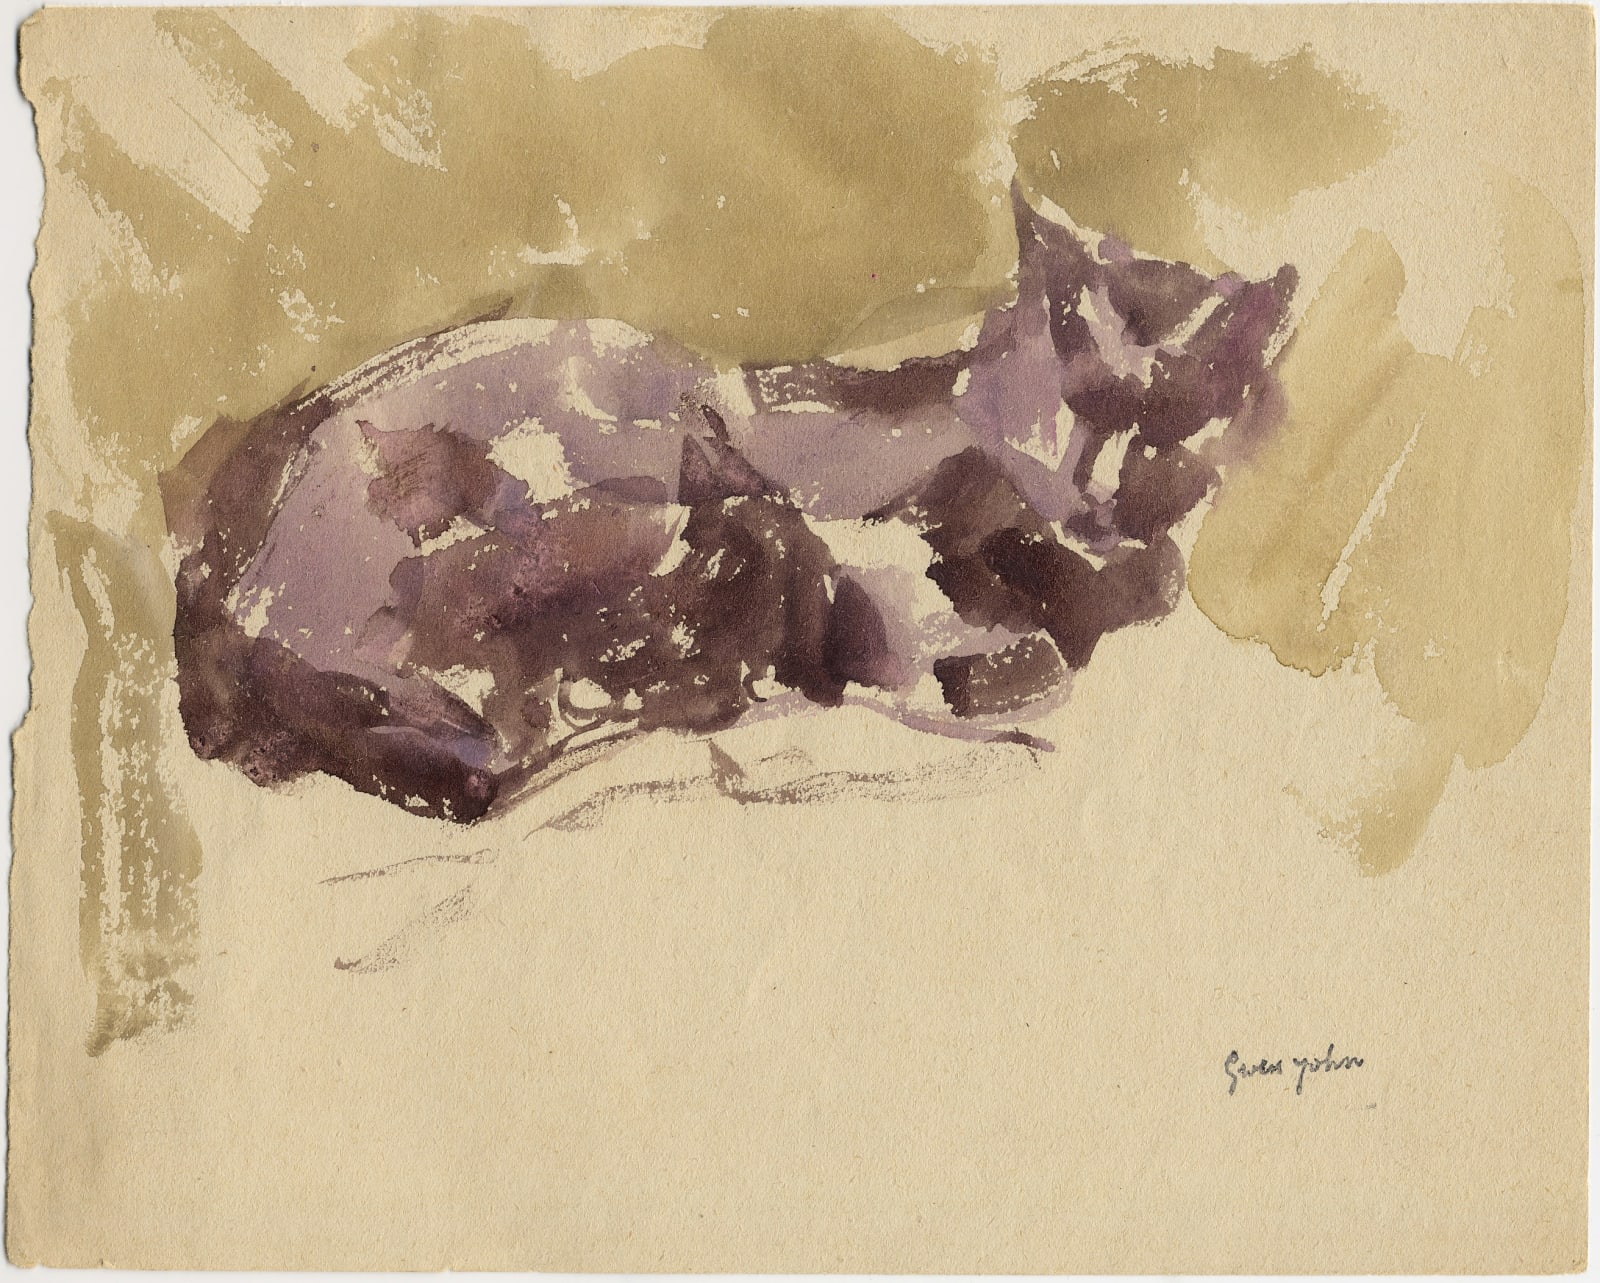 GWEN JOHN, Sleeping black cat, facing right